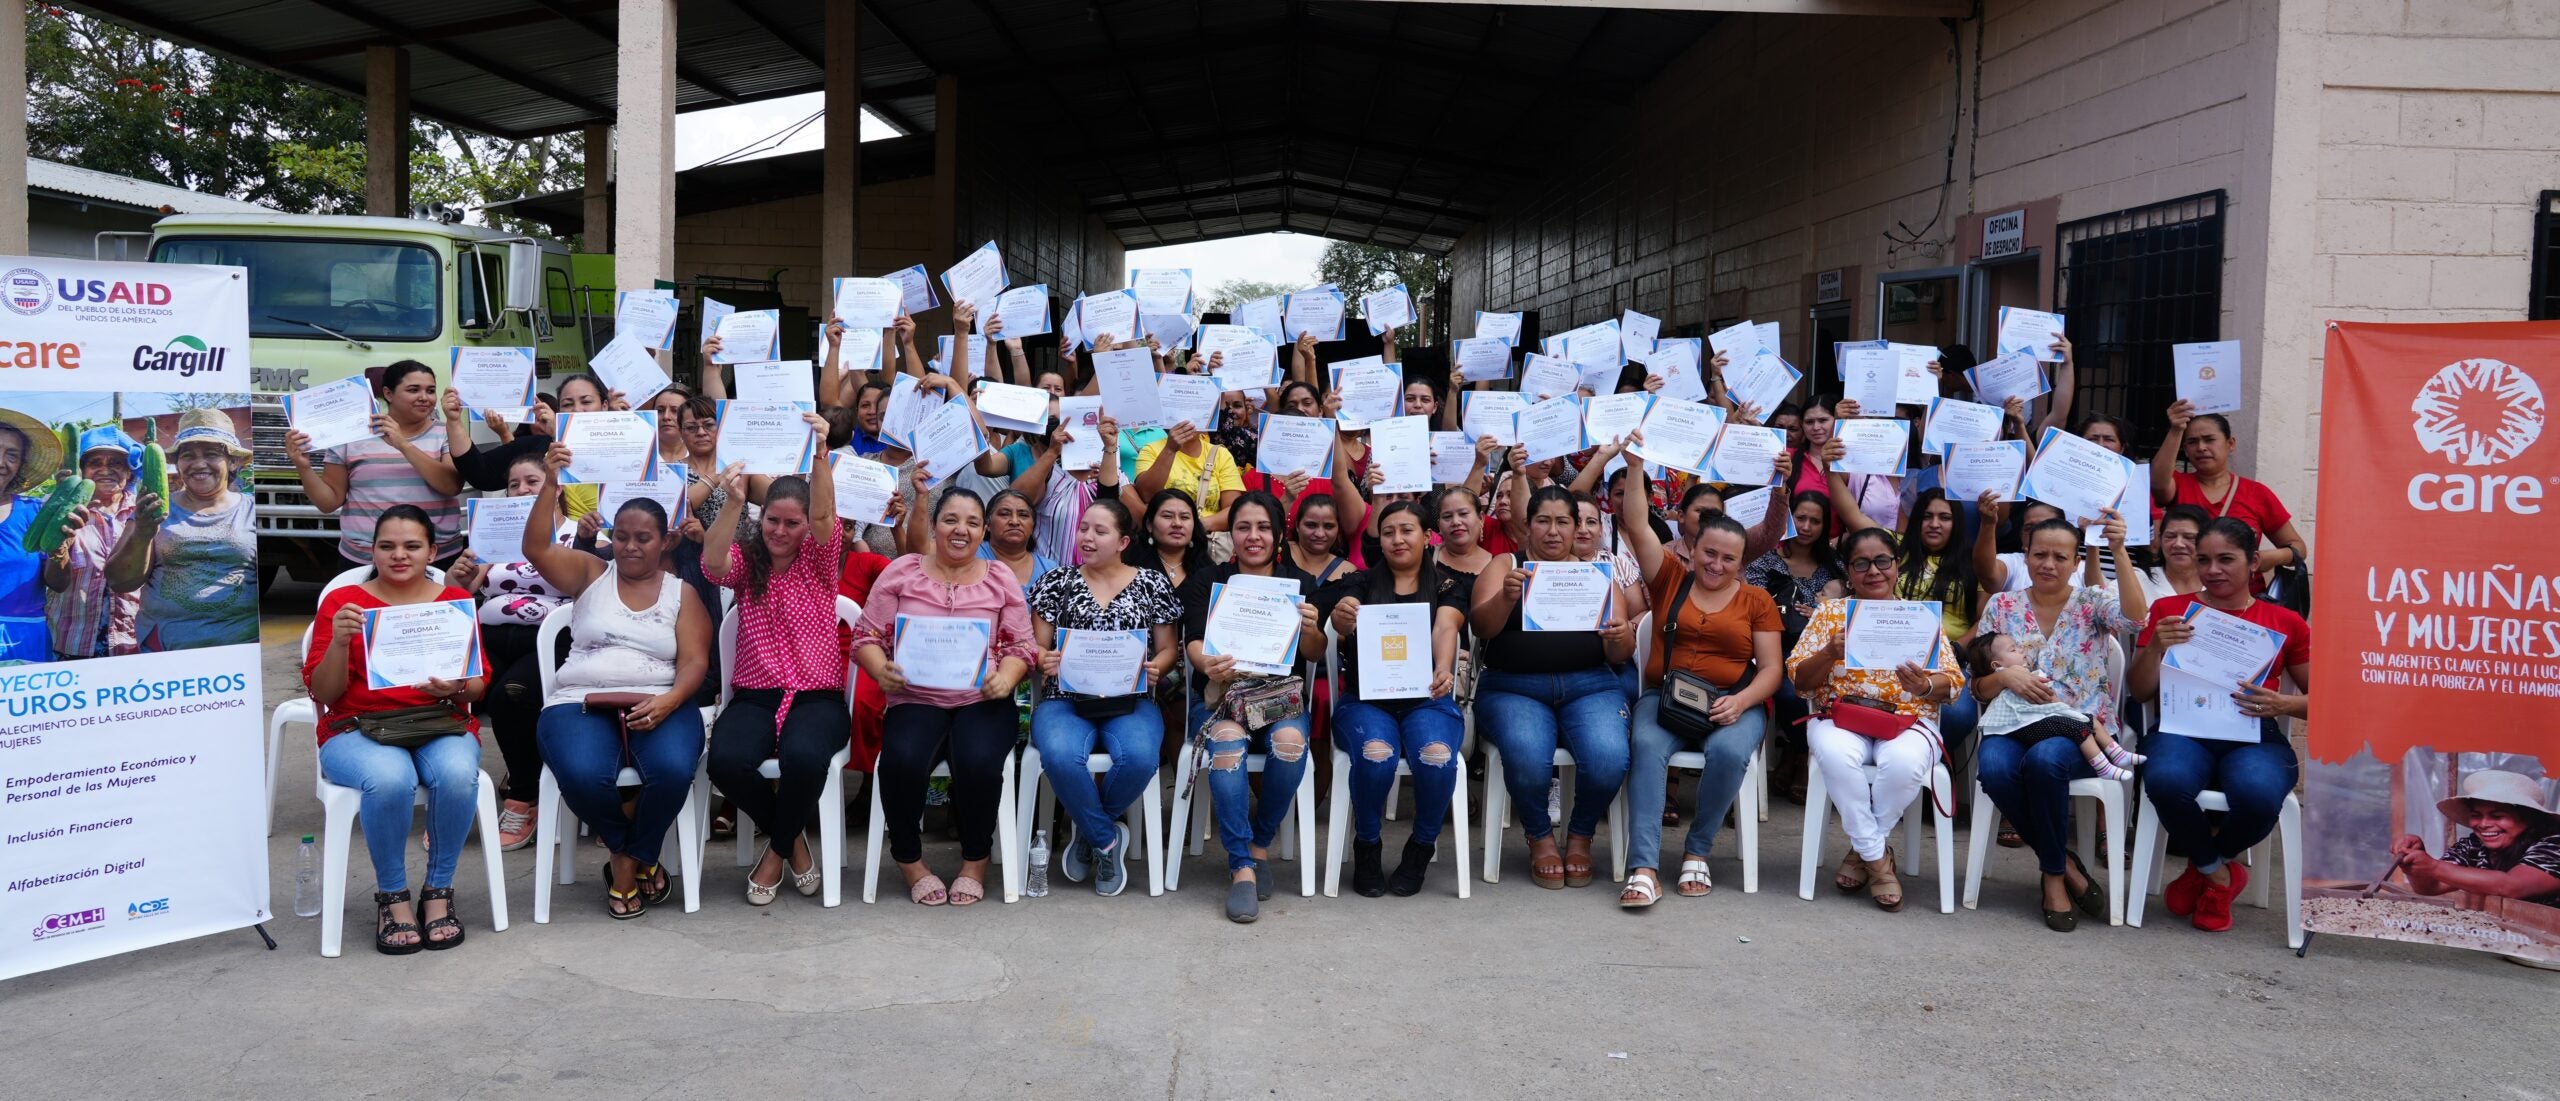 Group photo of women displaying graduation certificates